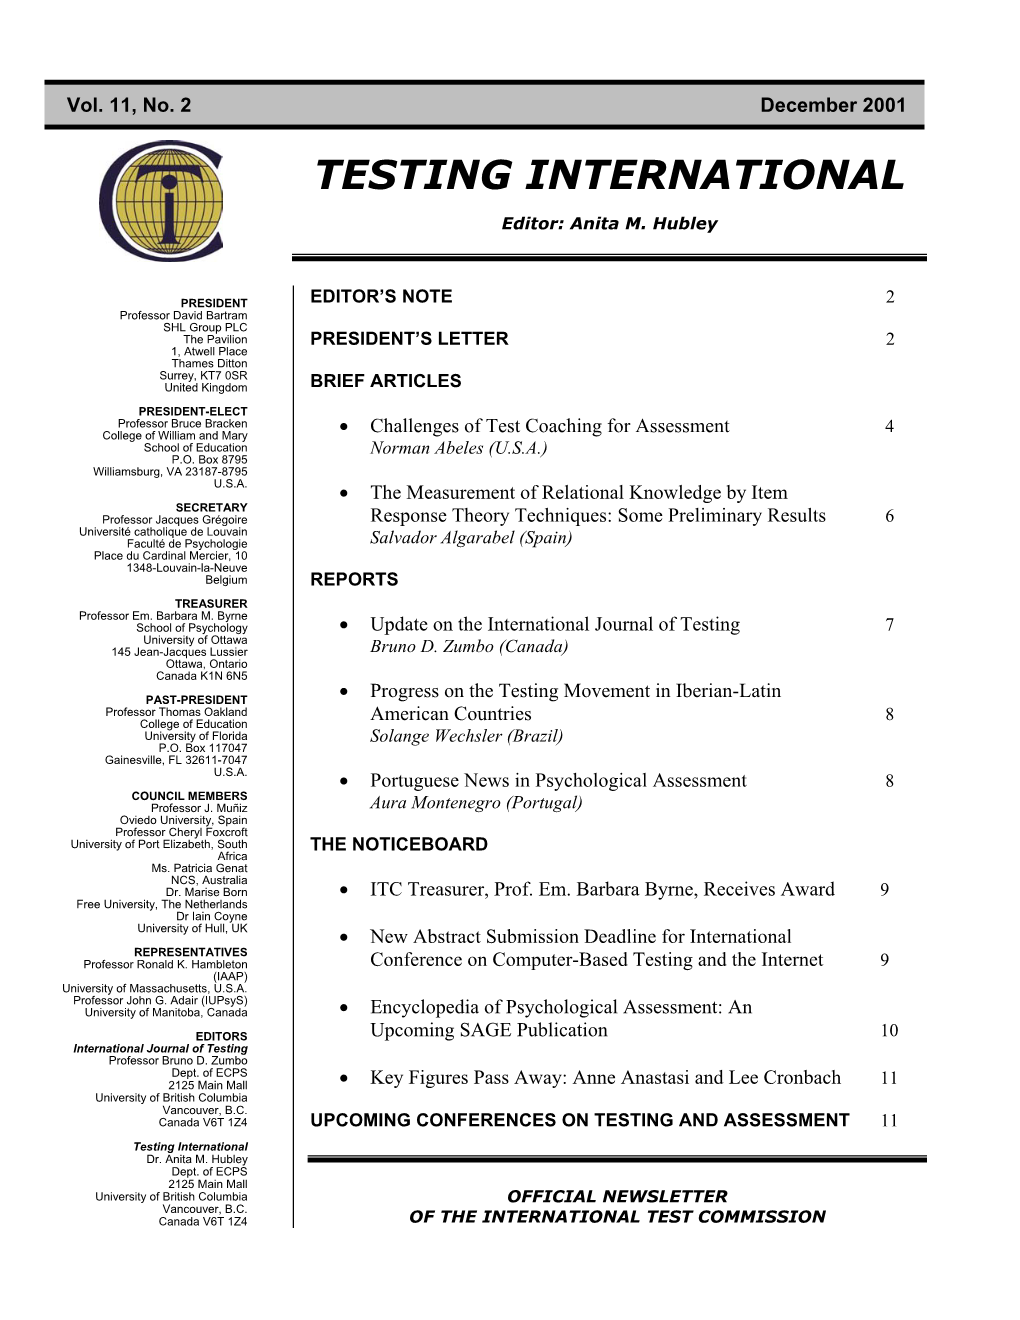 Testing International